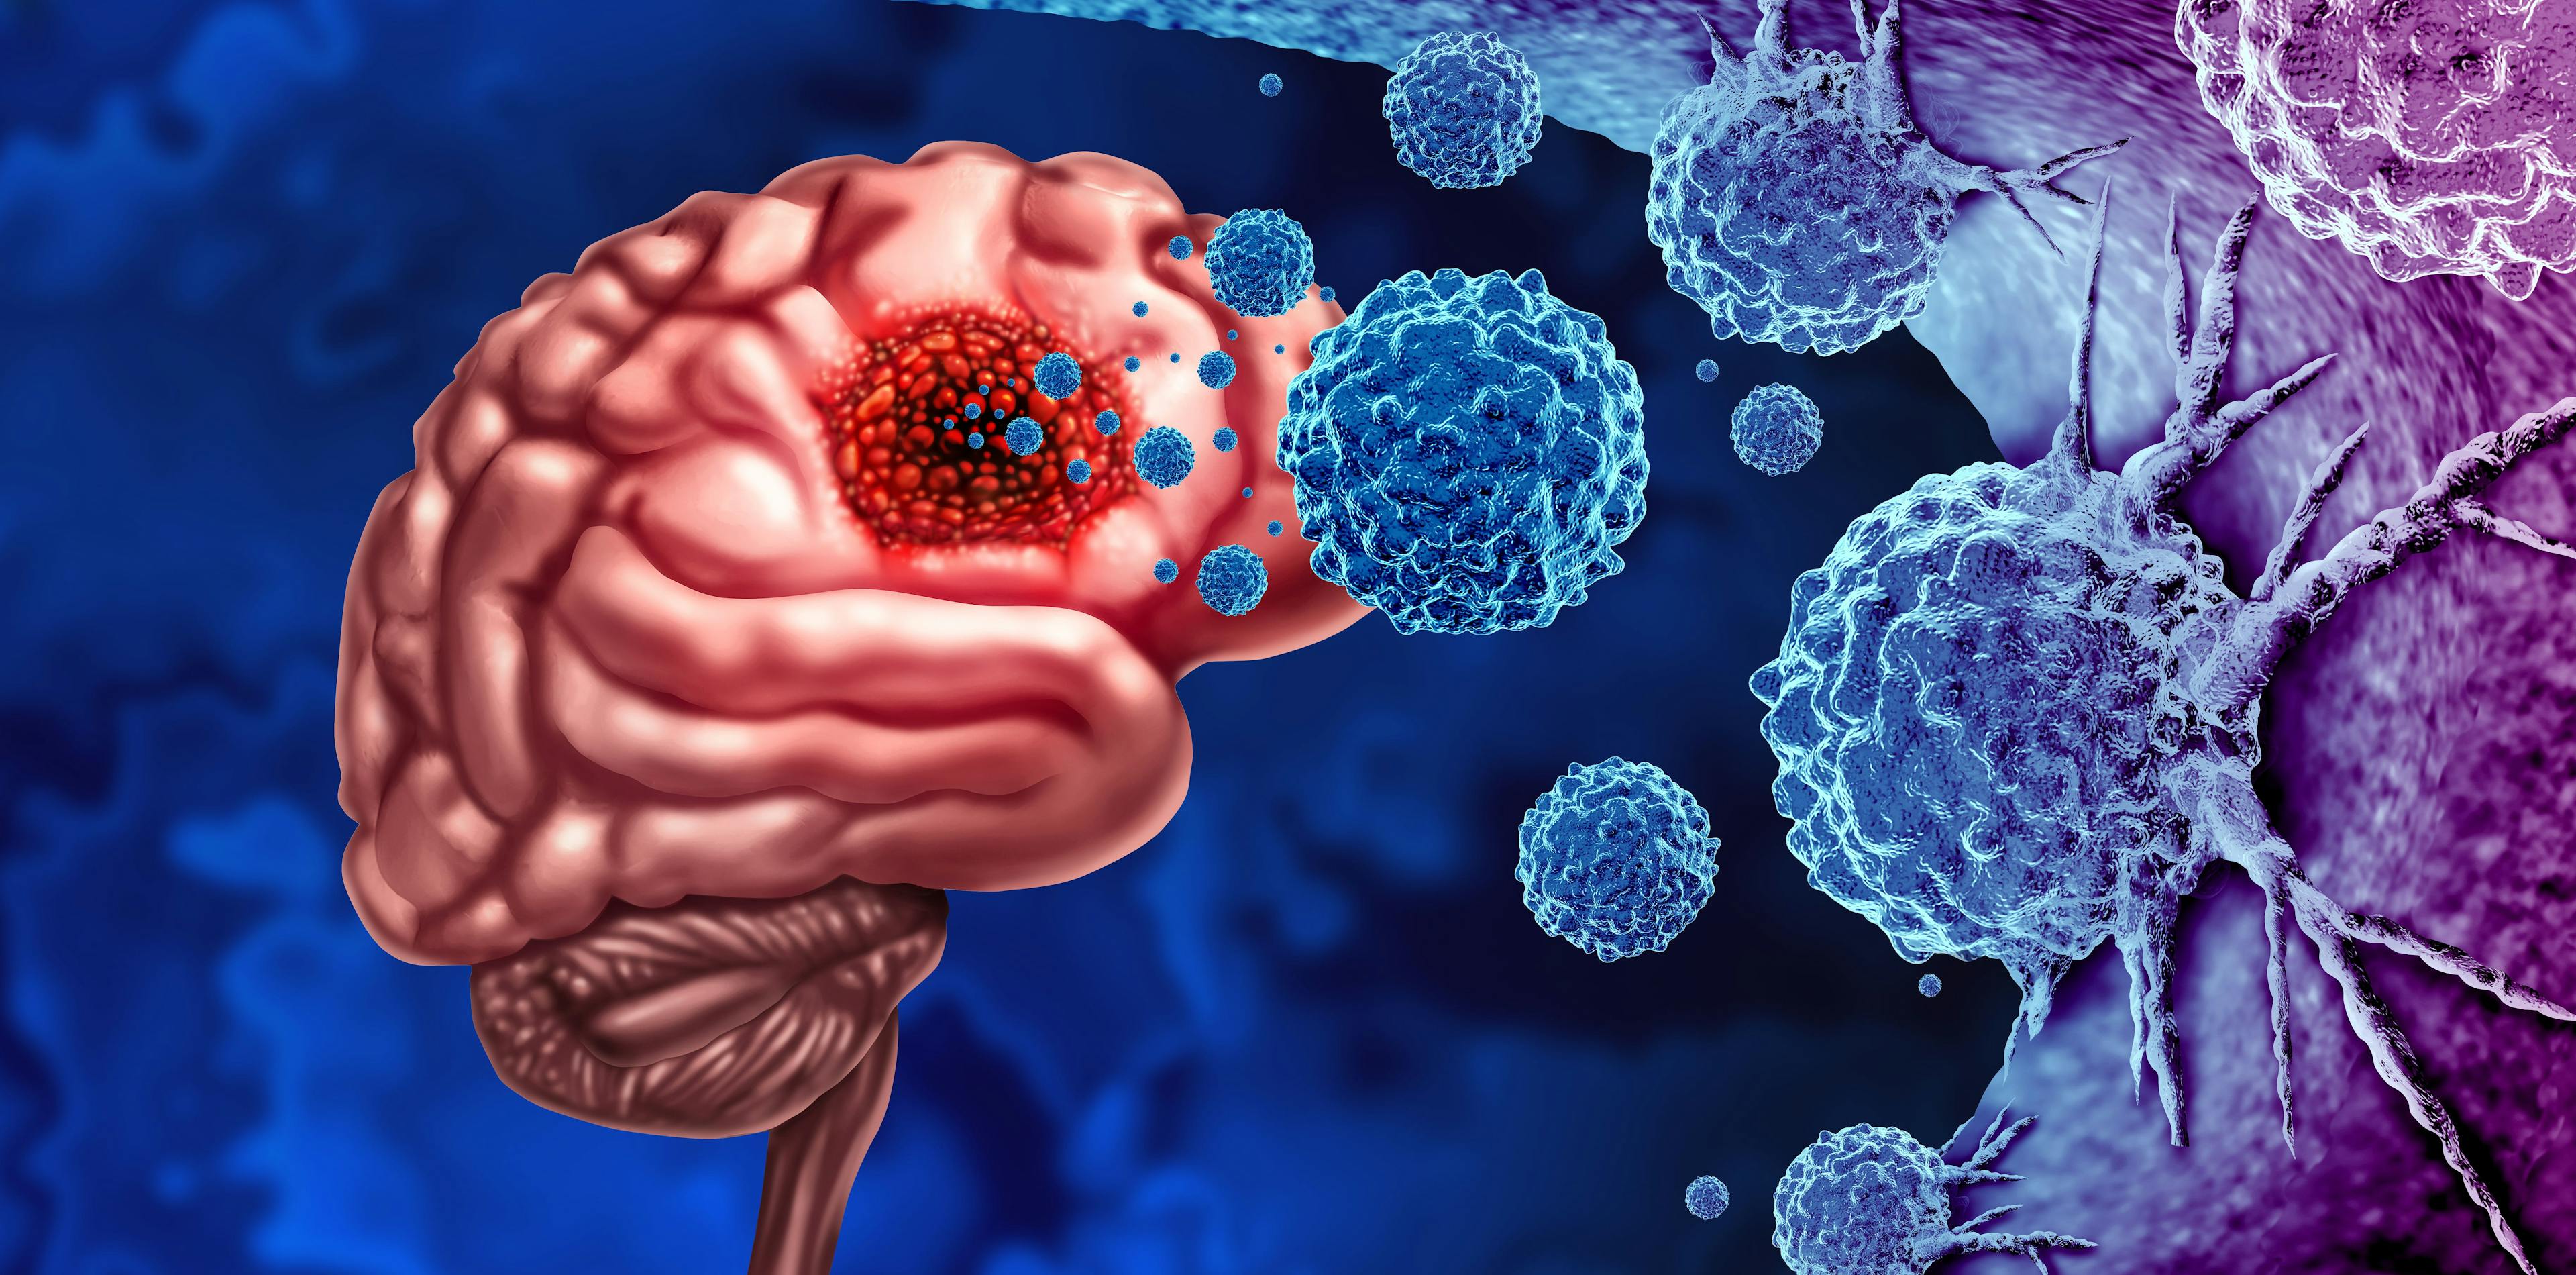 Glioma Cancer Tumor as malignant cells outbreak as a brain disease attacking neurons as a medical concept of neurological disease